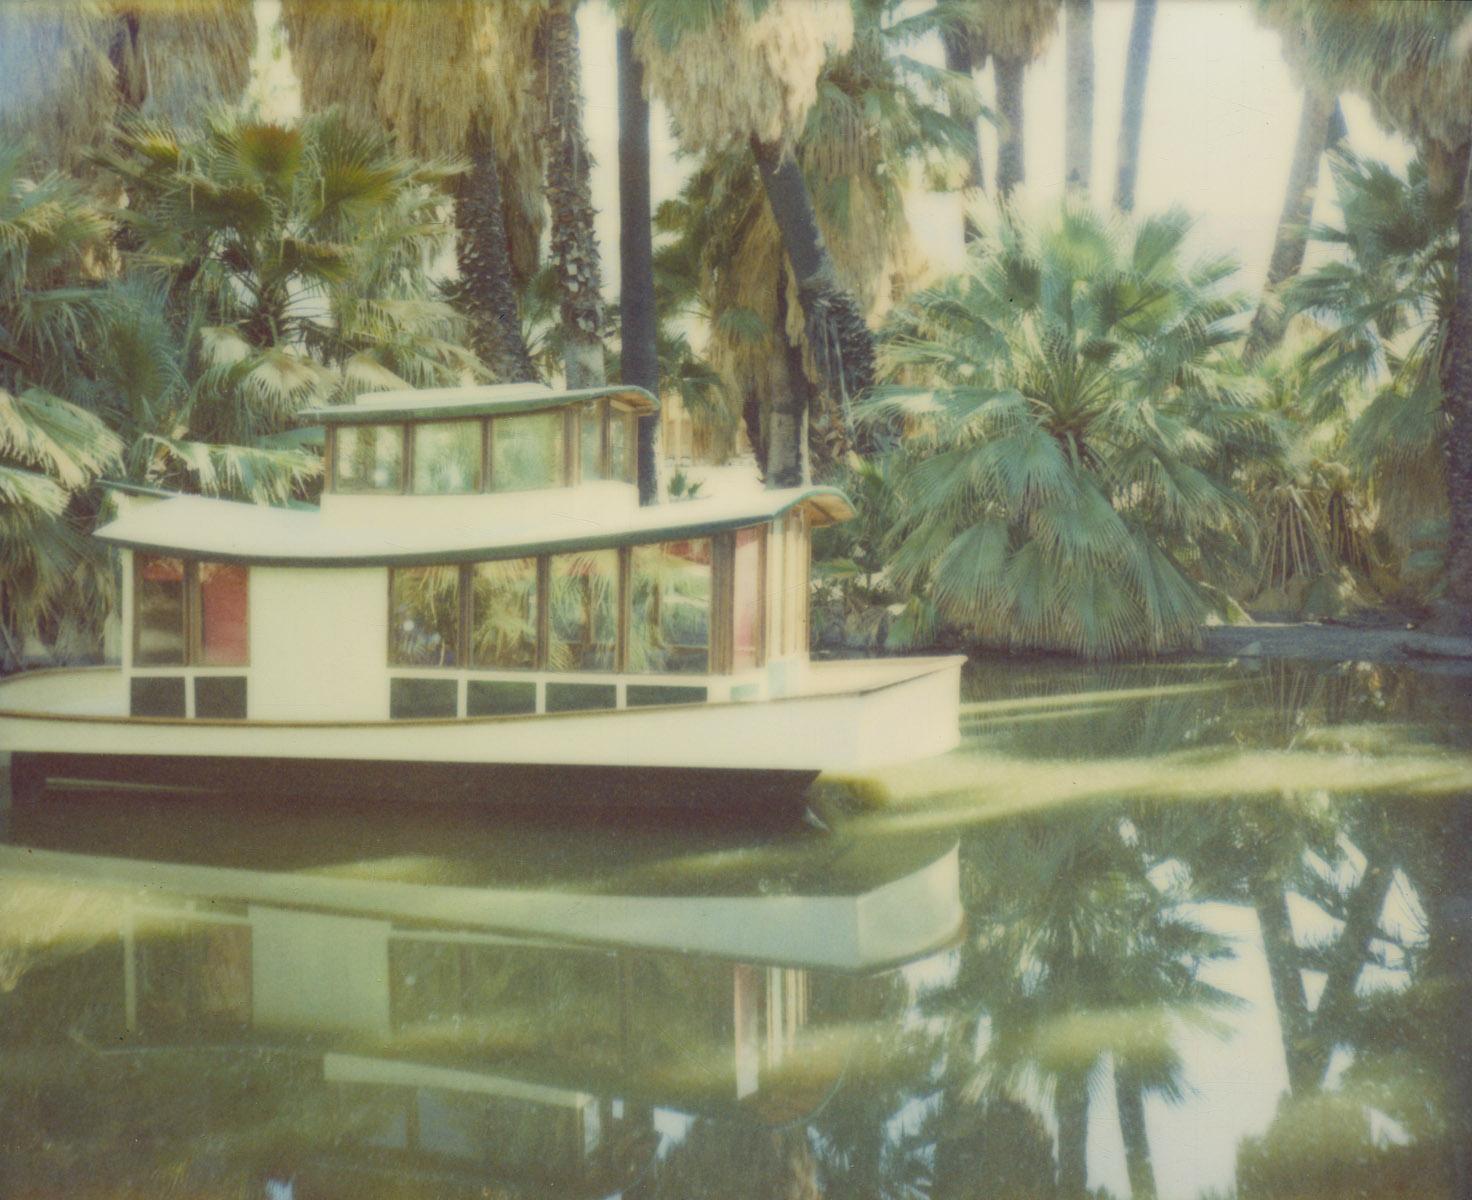 Stefanie Schneider Color Photograph - 29 Palms Oasis (29 Palms, CA) - Polaroid, analog, vintage, Contemporary, Color